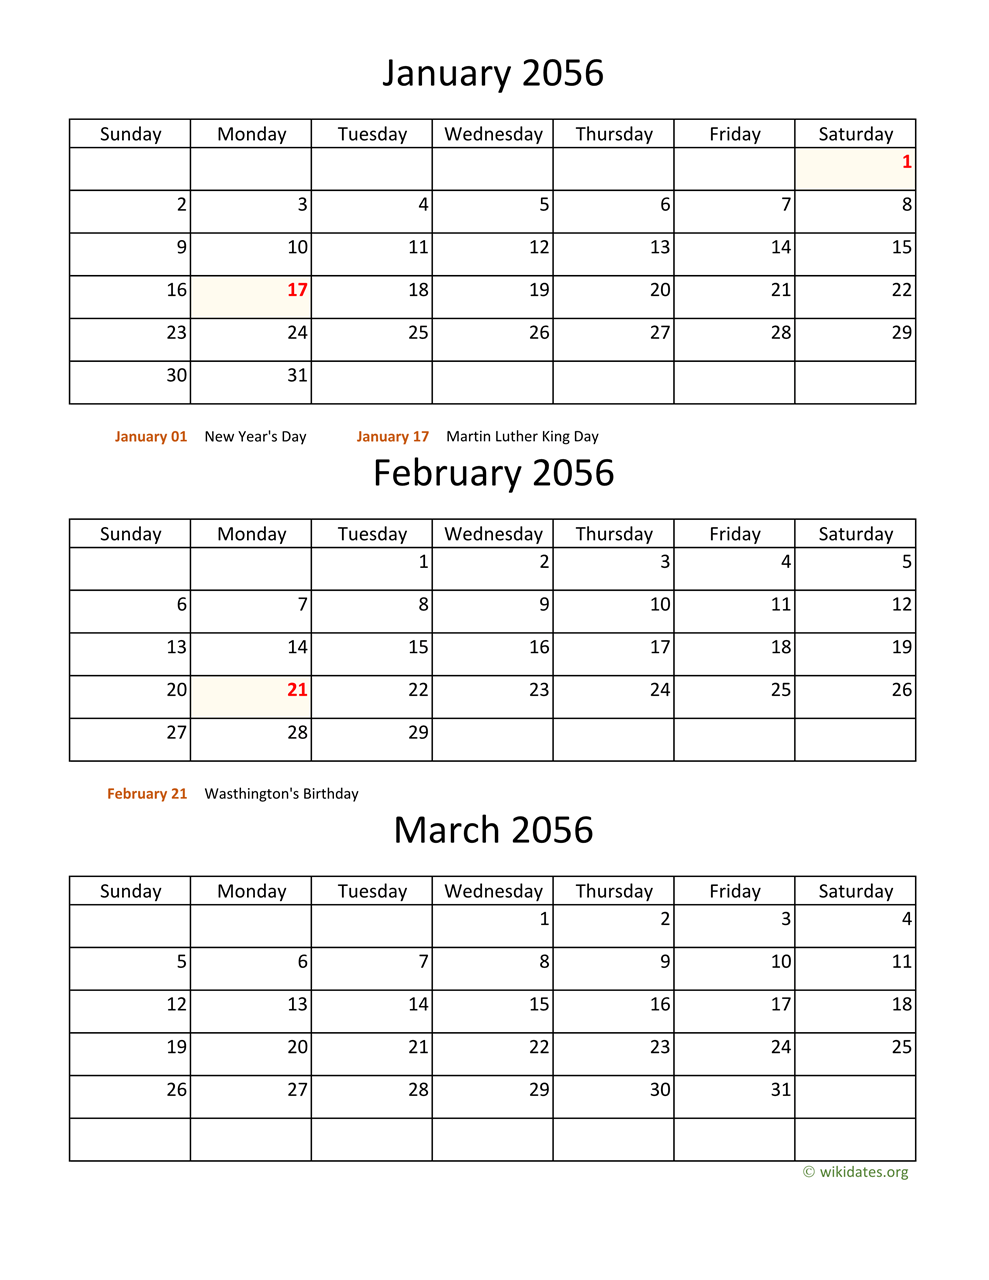 Printable 2056 Calendar | WikiDates.org